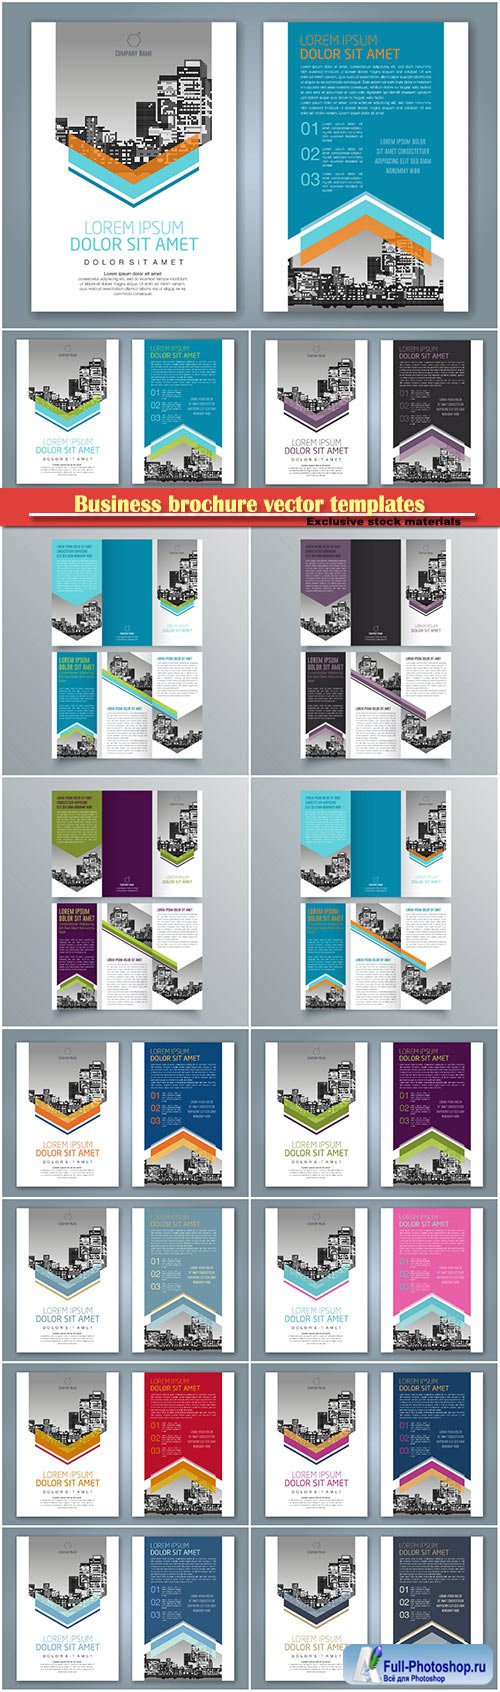 Business brochure vector templates, magazine cover, business mockup, education, presentation, report # 59